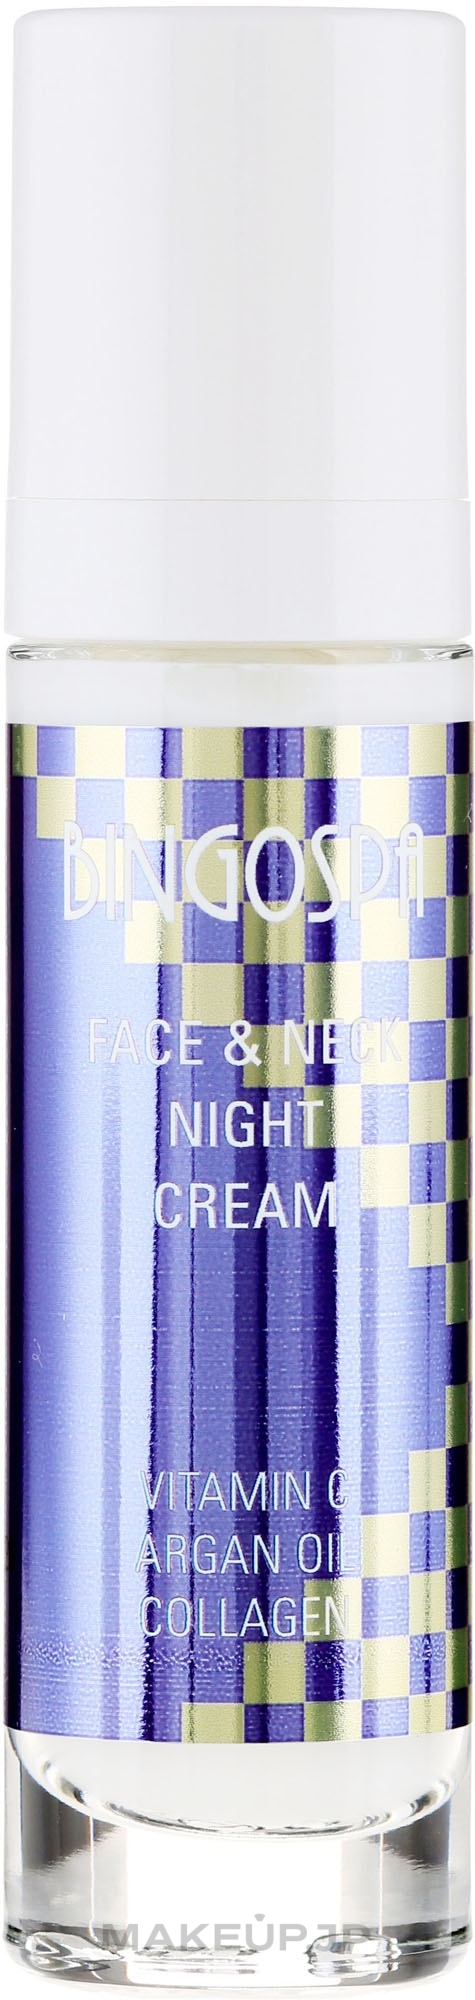 Face & Neck Cream with Vitamin C, Argan Oil & Collagen - BingoSpa Face&Neck Night Cream — photo 50 g